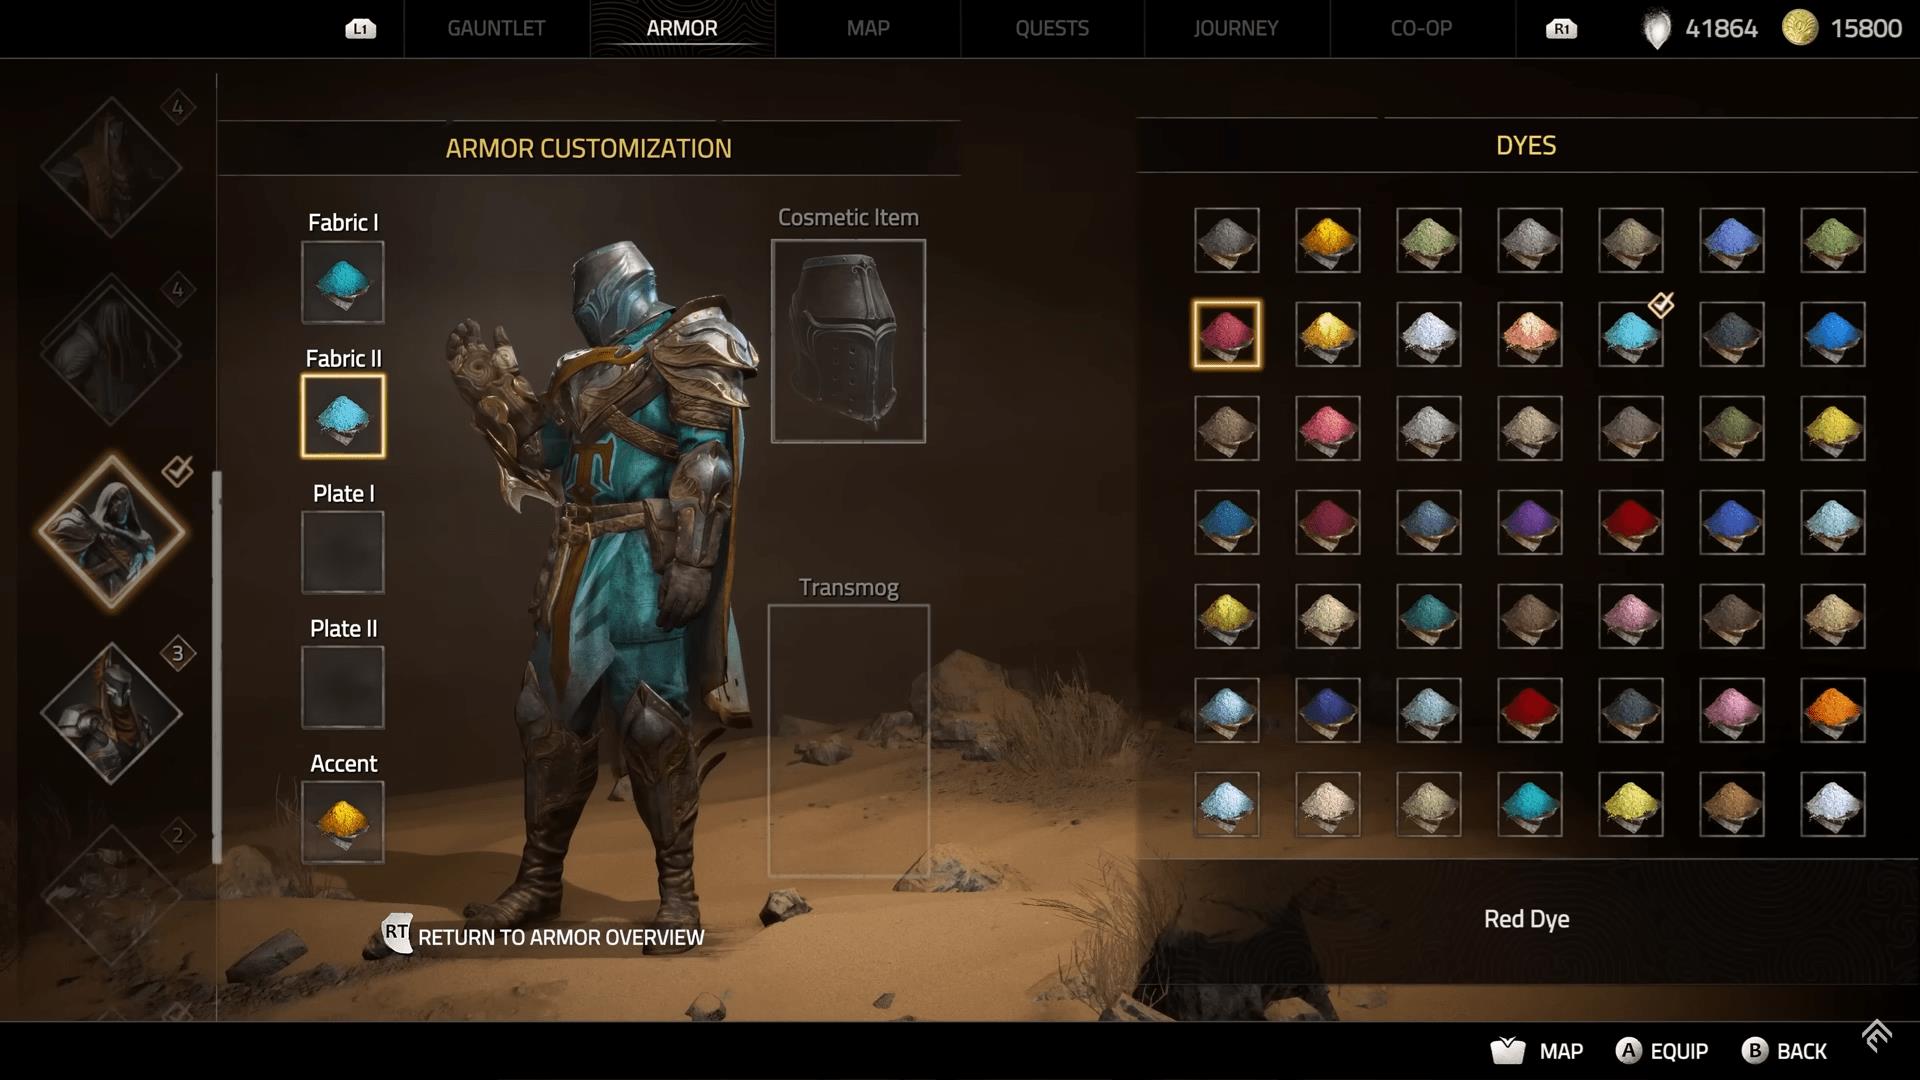 armor customization character customization atlas fallen wiki guide